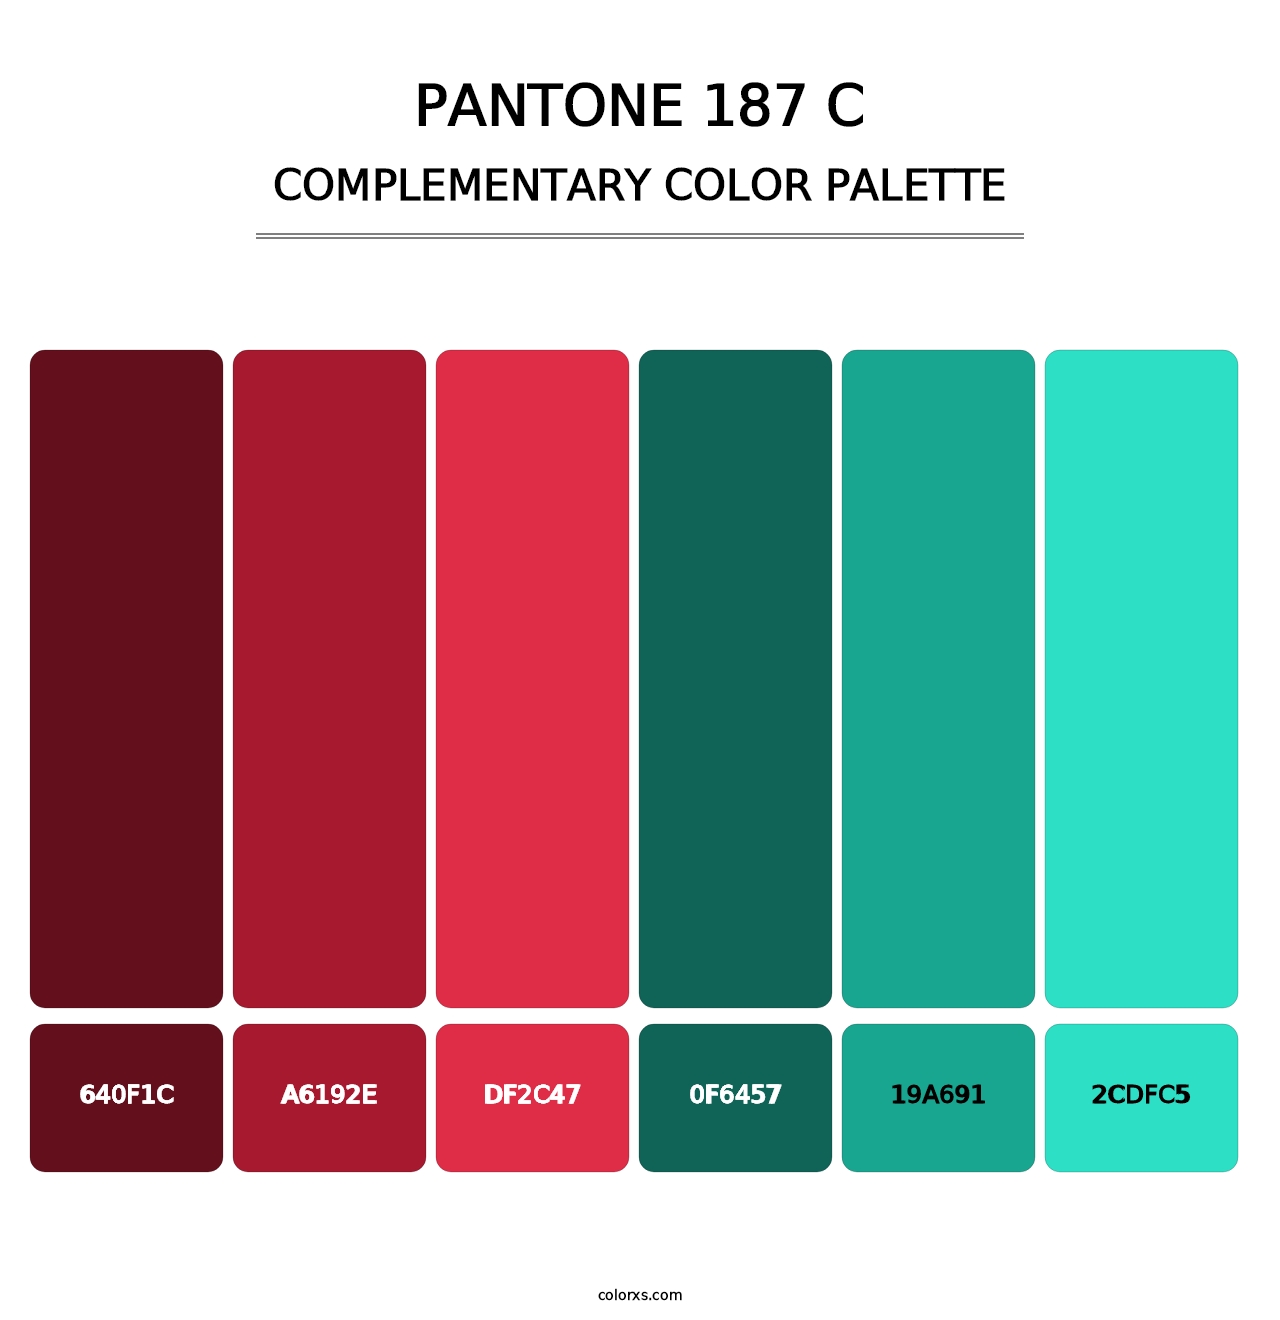 PANTONE 187 C - Complementary Color Palette